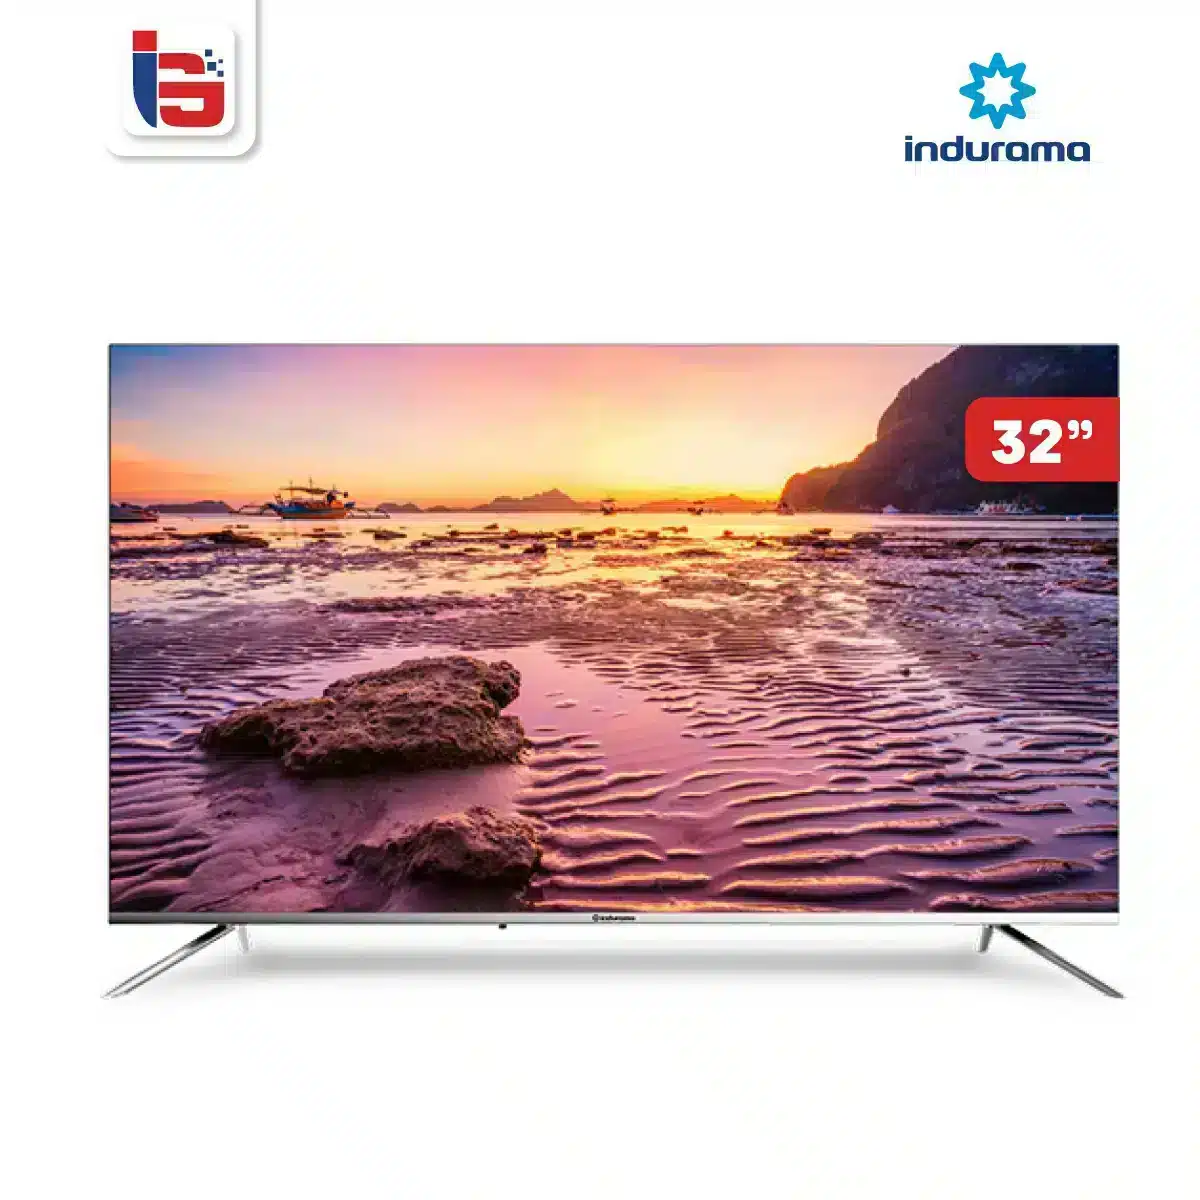 Smart TV INDURAMA 32 pulgadas HD - Importadora Sonib